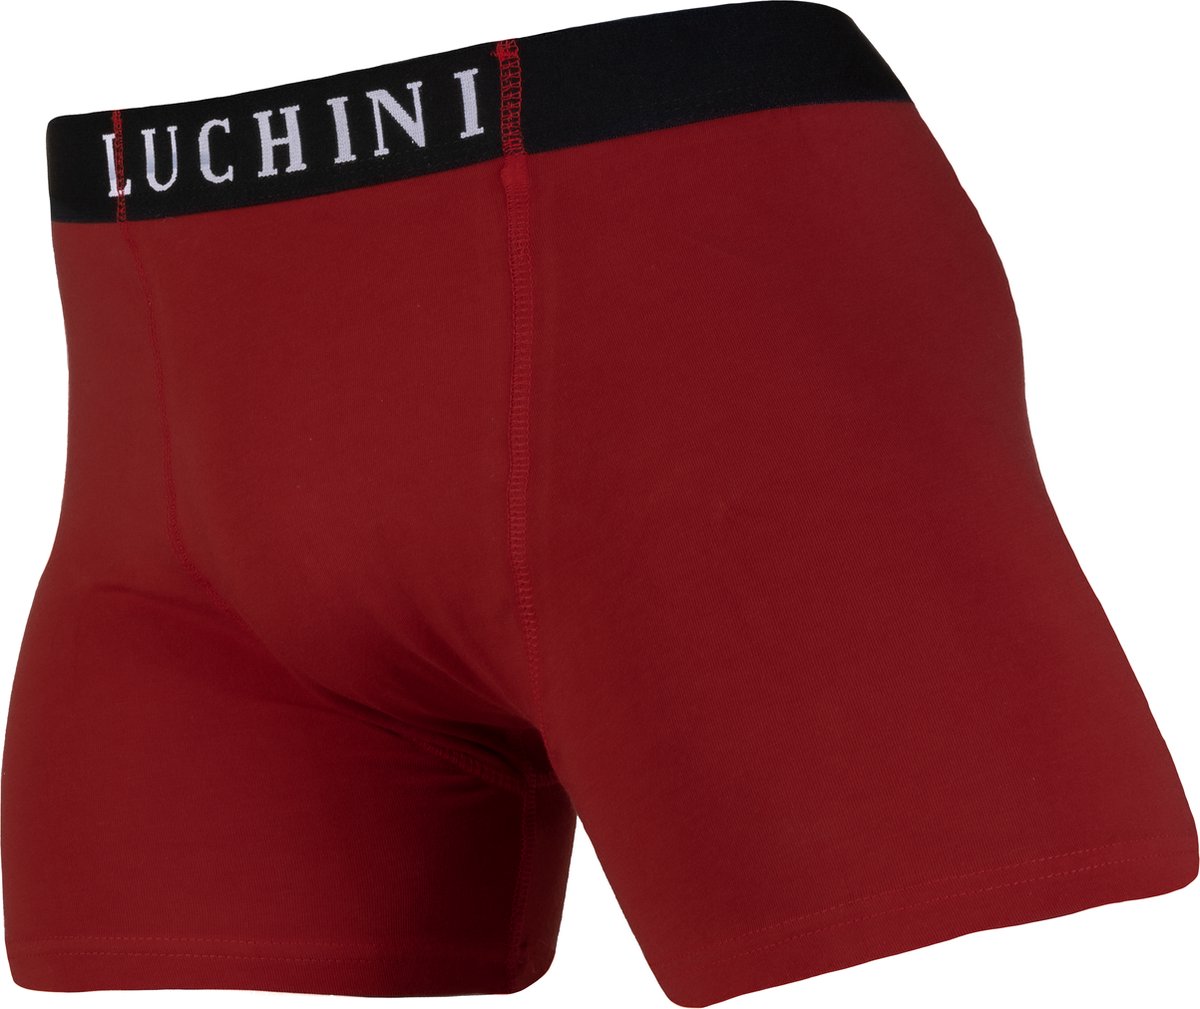 Luchini Clothing ® - LC Classic Maat XL - Premium Boxershorts heren - Heren Privacy Boxers met verborgen vak - 2-PACK boxershorts - Stealth boxers - Rood